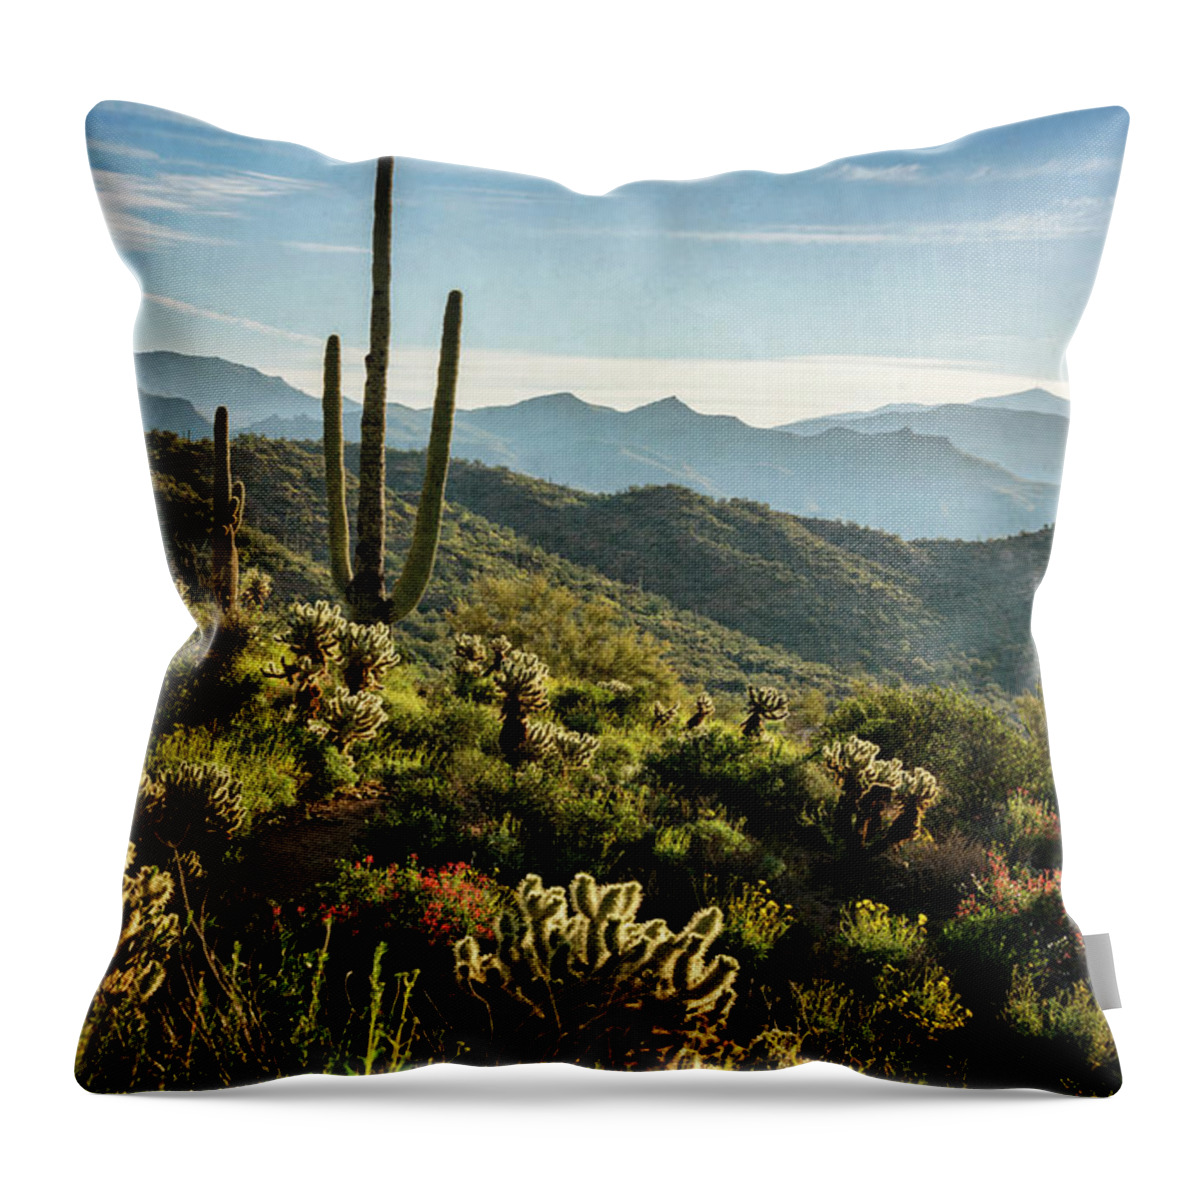 Arizona Throw Pillow featuring the photograph Spring Morning in the Sonoran by Saija Lehtonen